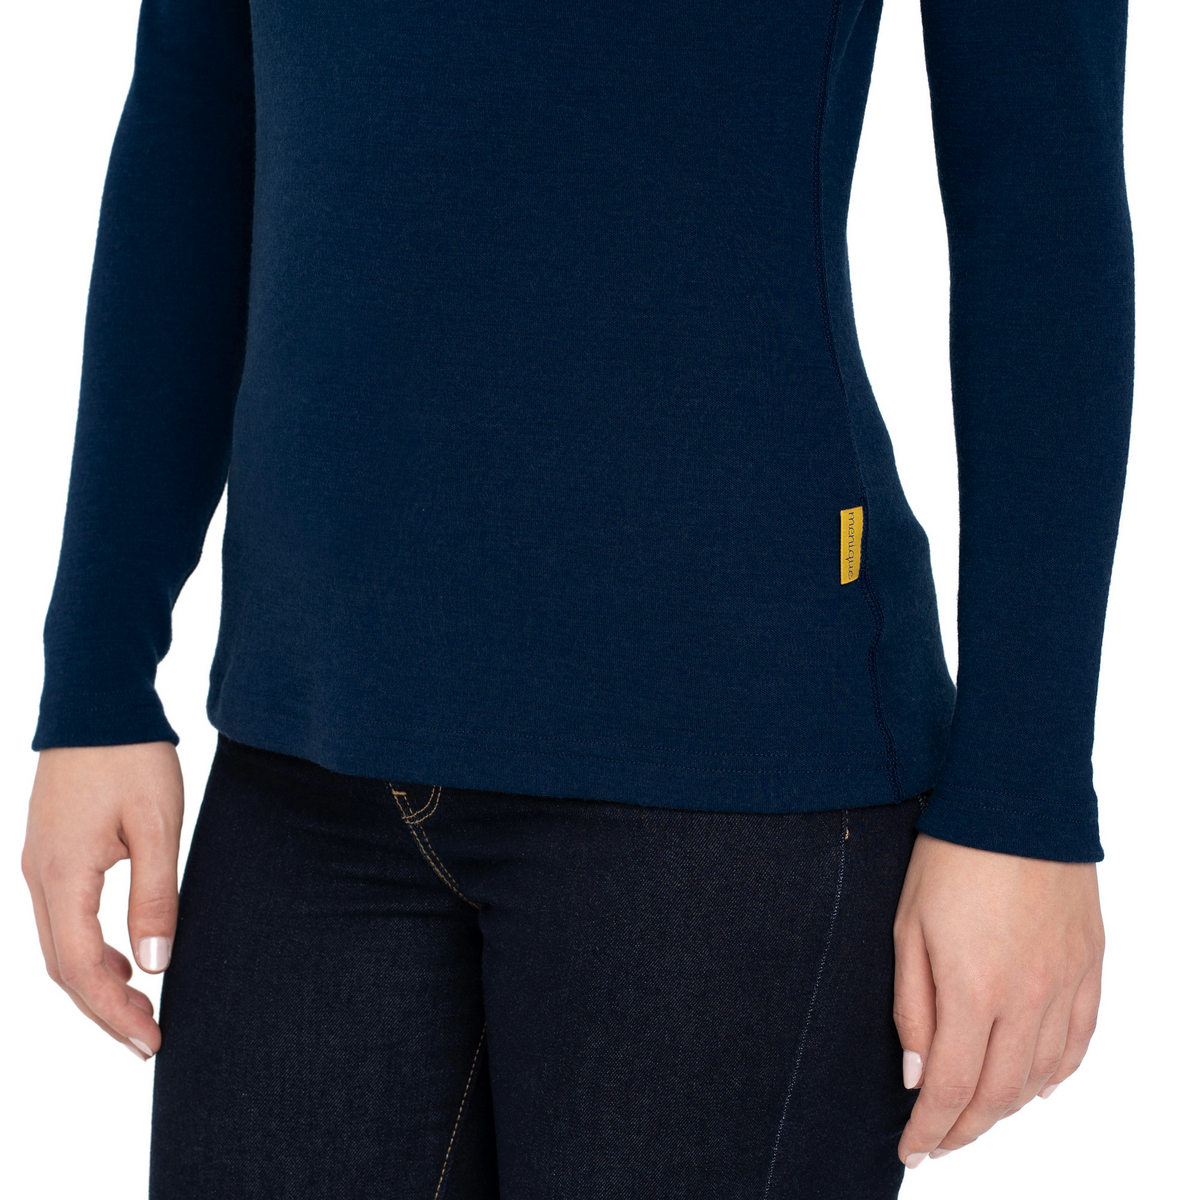 MENIQUE Long Sleeve Crew 100% Merino Wool Womens Shirt Dark Blue